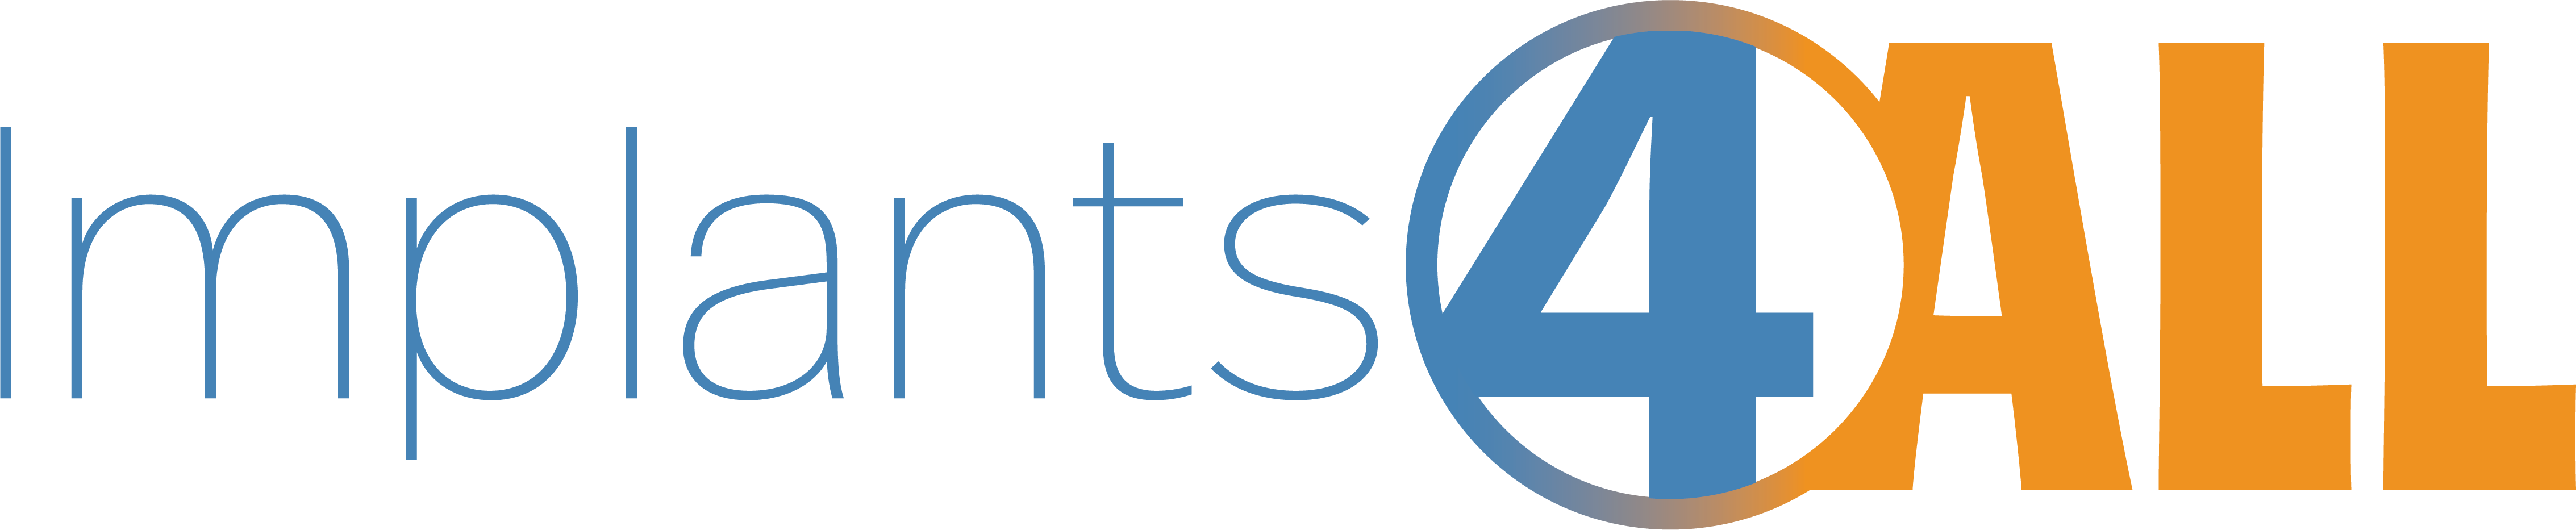 Implants4All logo